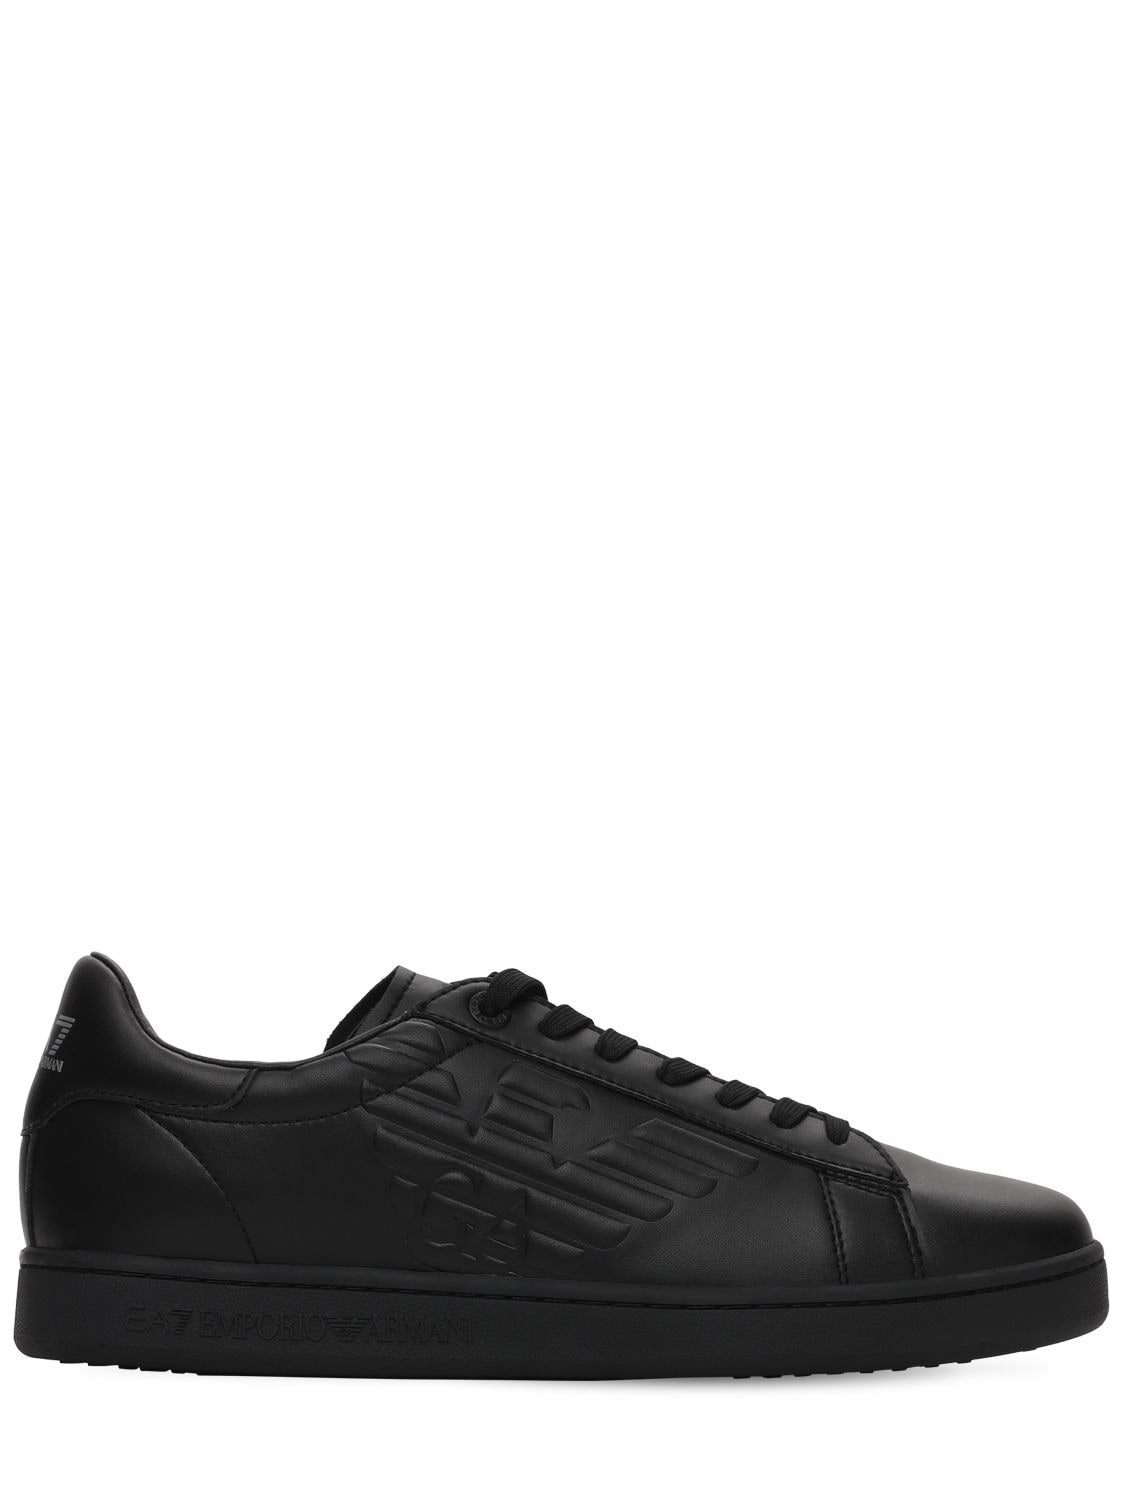 Ea7 Logo Leather Sneakers In Black